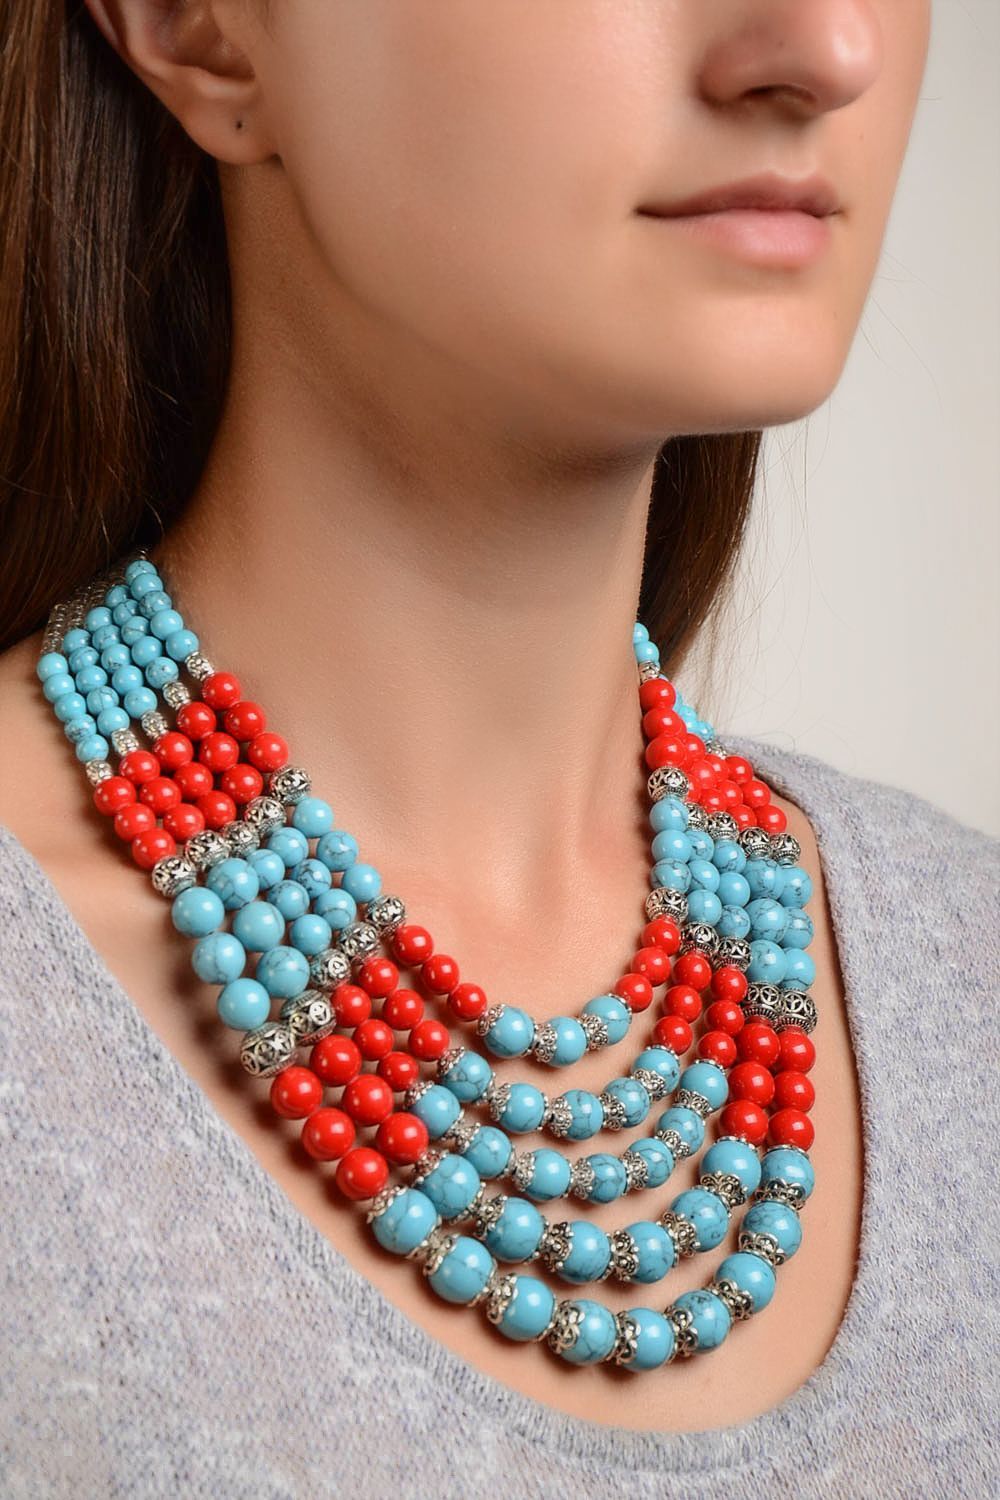 Bead necklace handmade jewelry stone necklace ethnic jewelry turquoise necklace photo 1